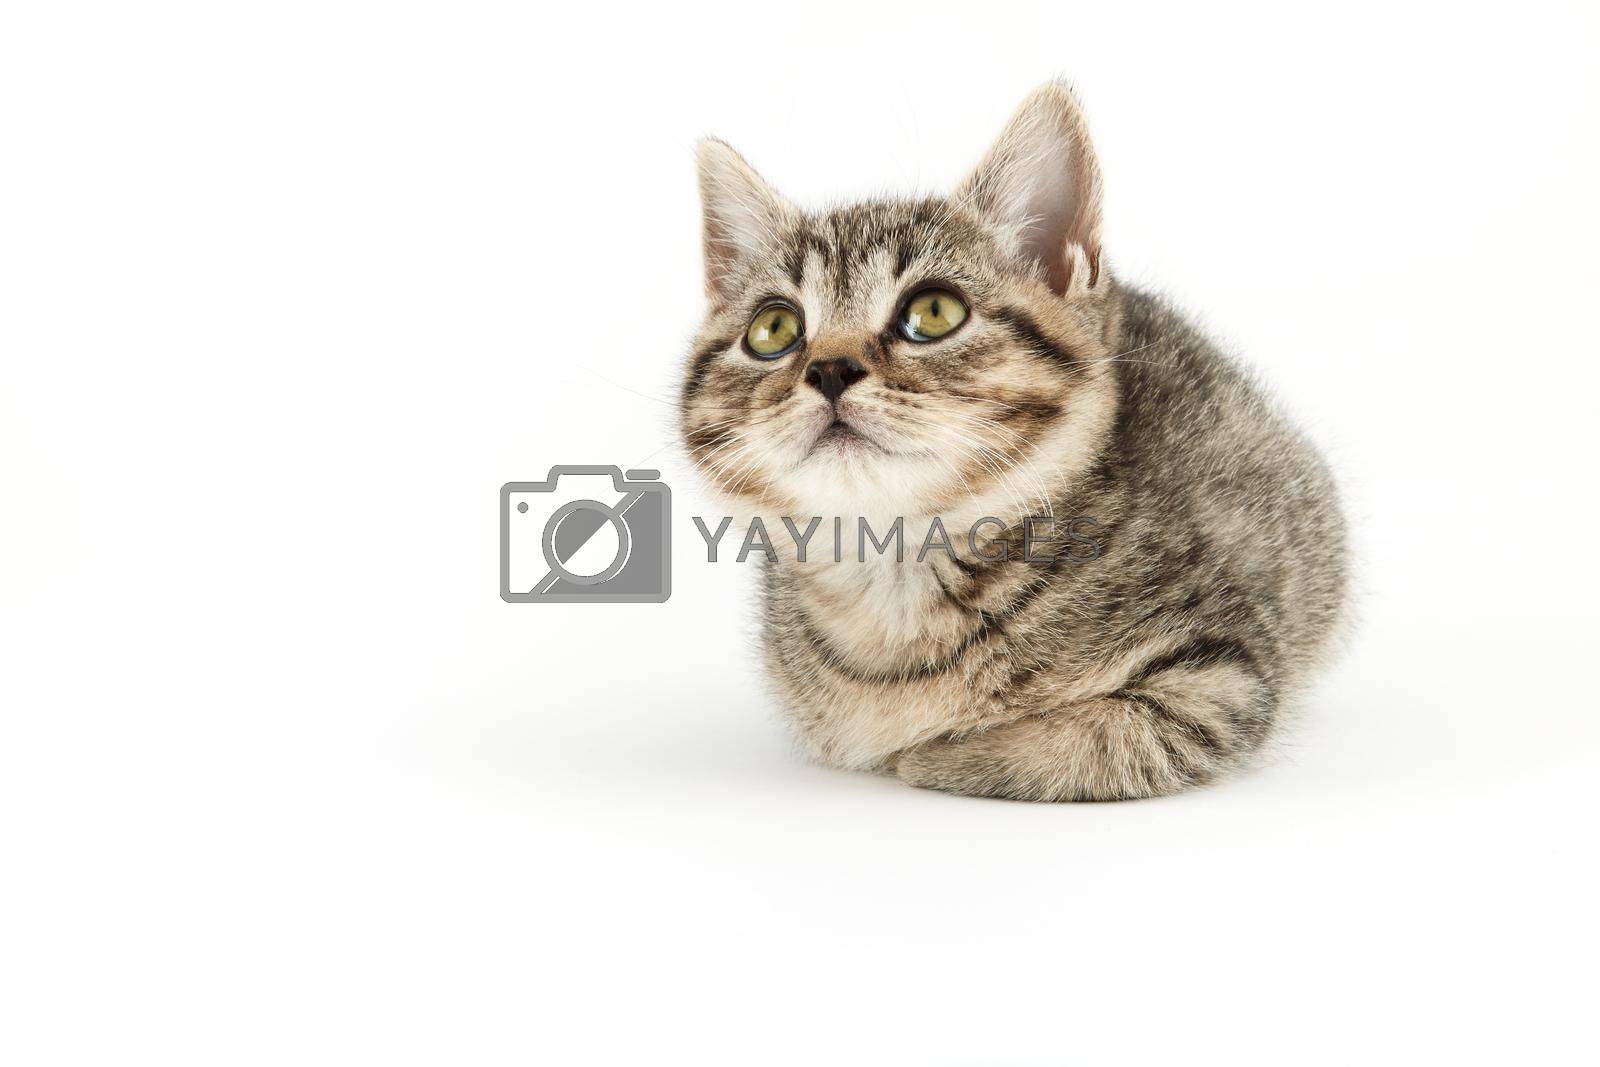 Royalty free image of Little tabby (European Shorthair) kitten by Xebeche2